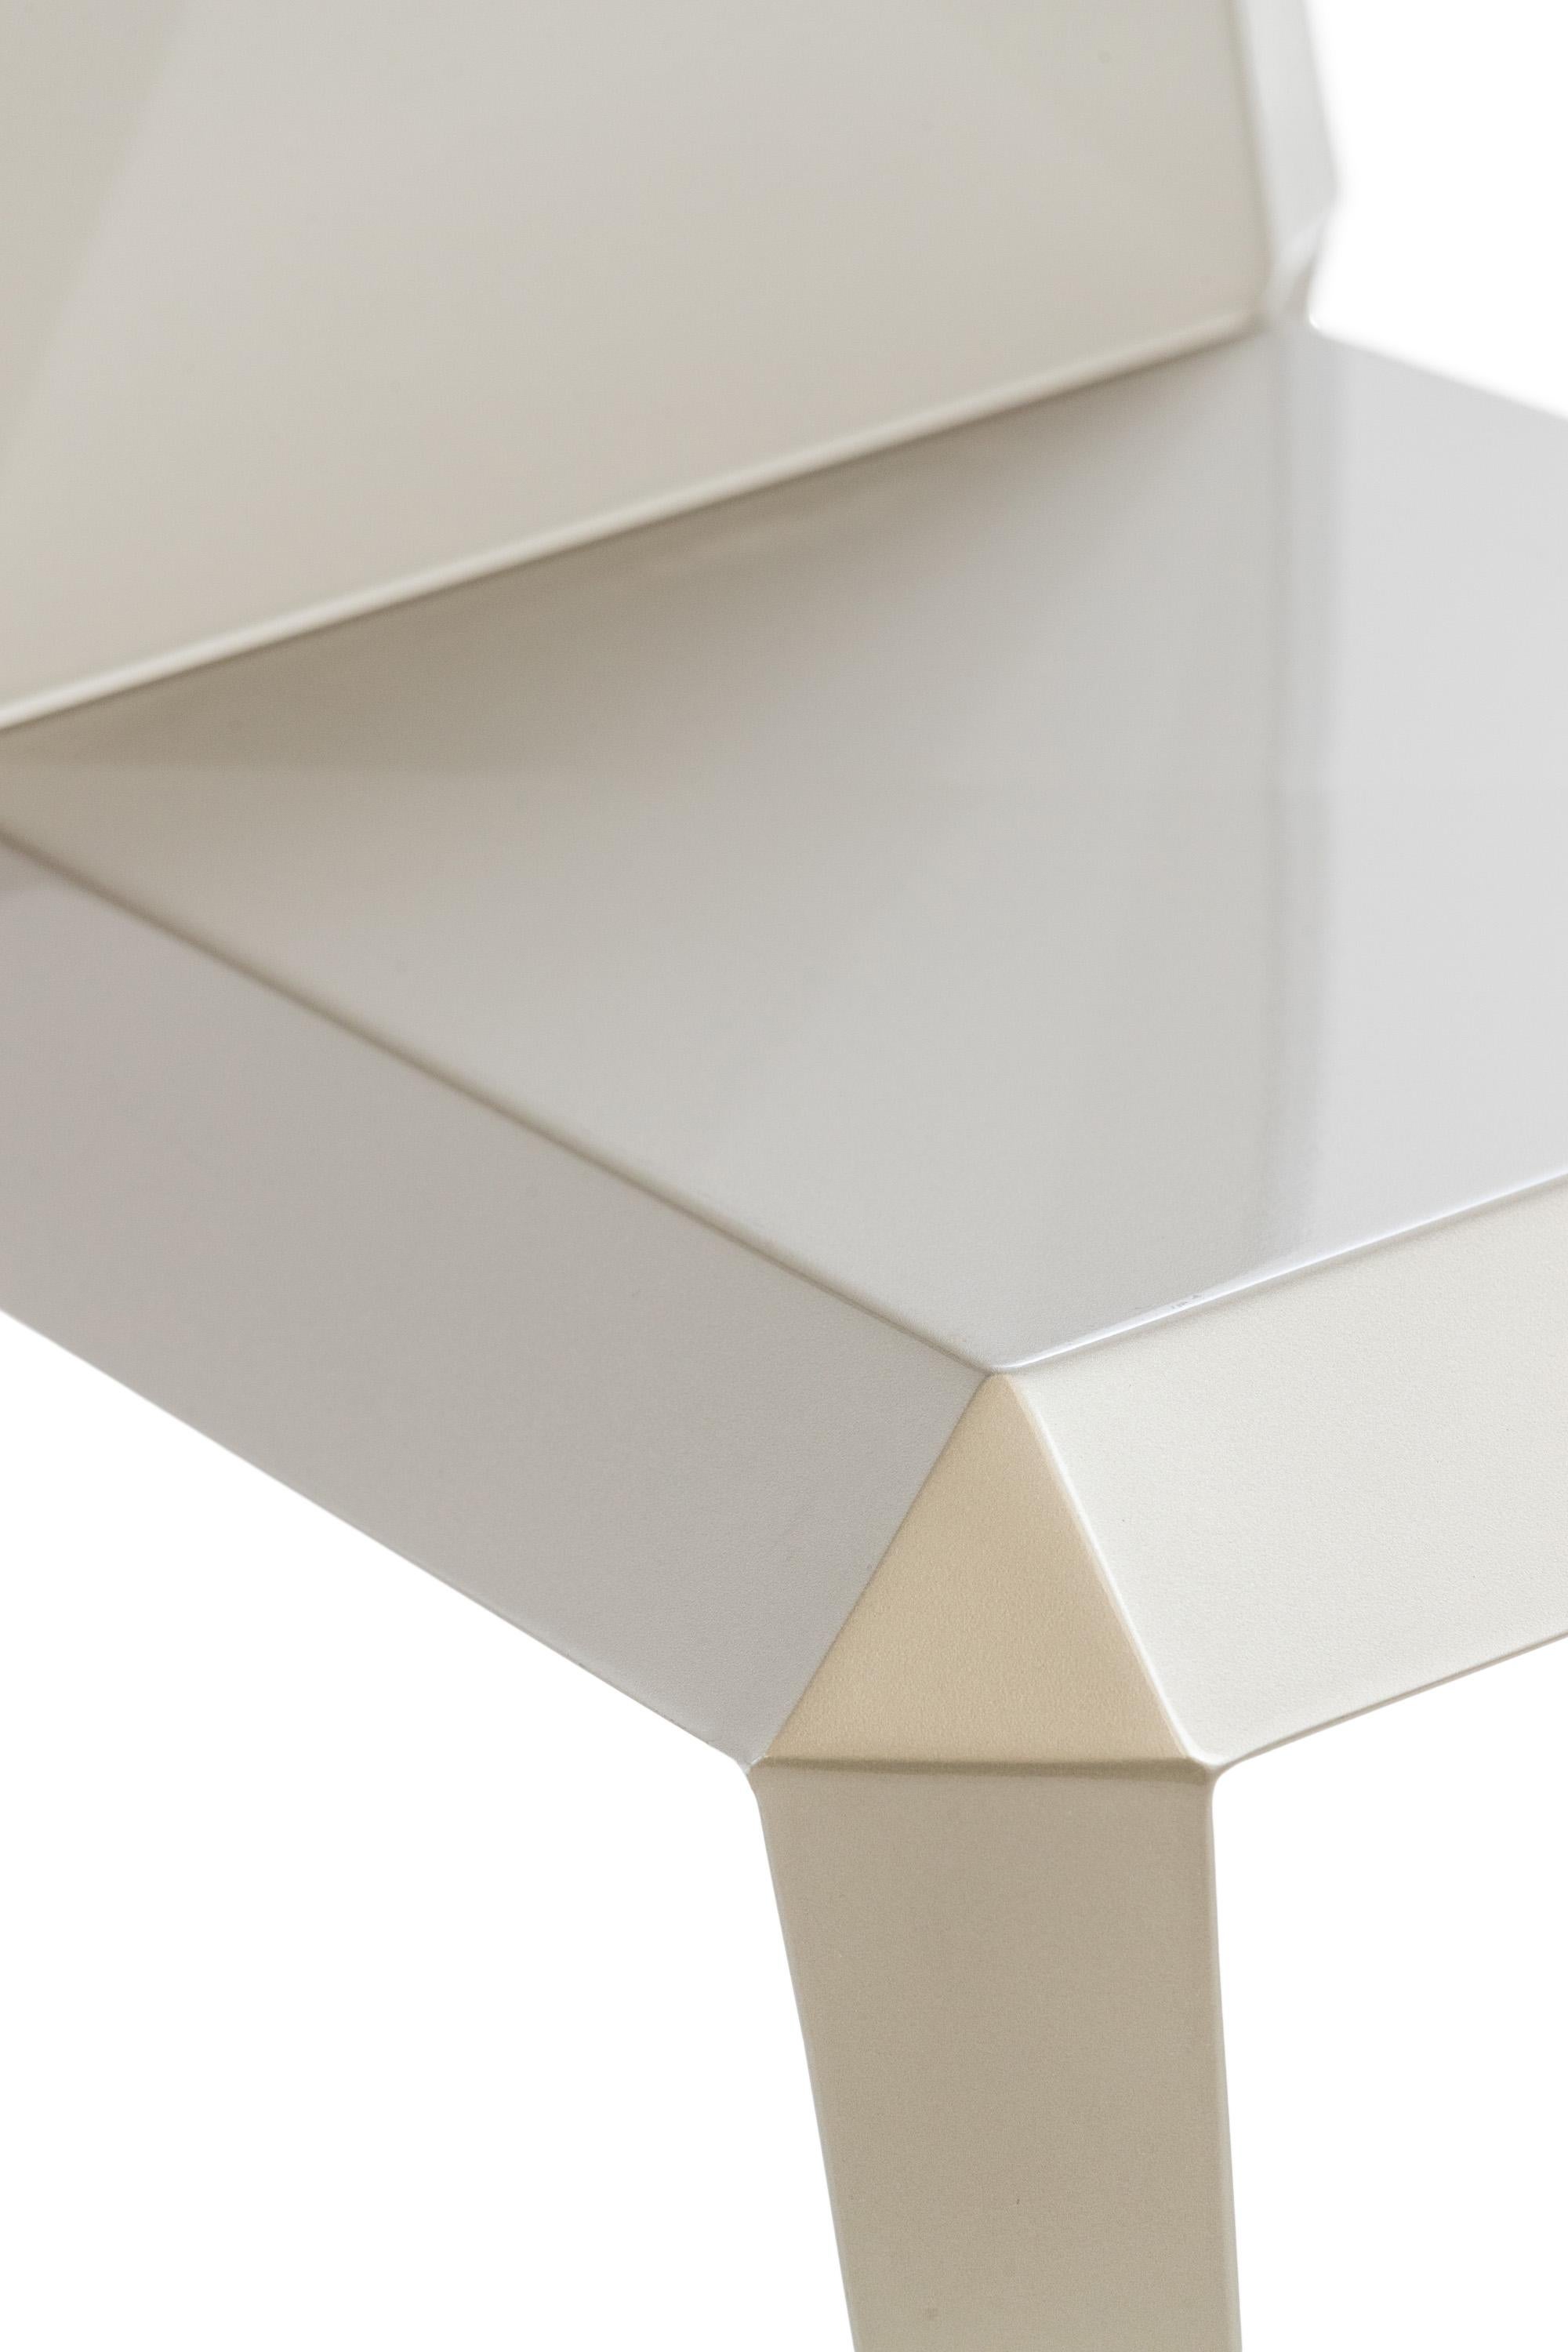 Aluminum Contemporary Lingotto Chair in Aluminium by Altreforme For Sale